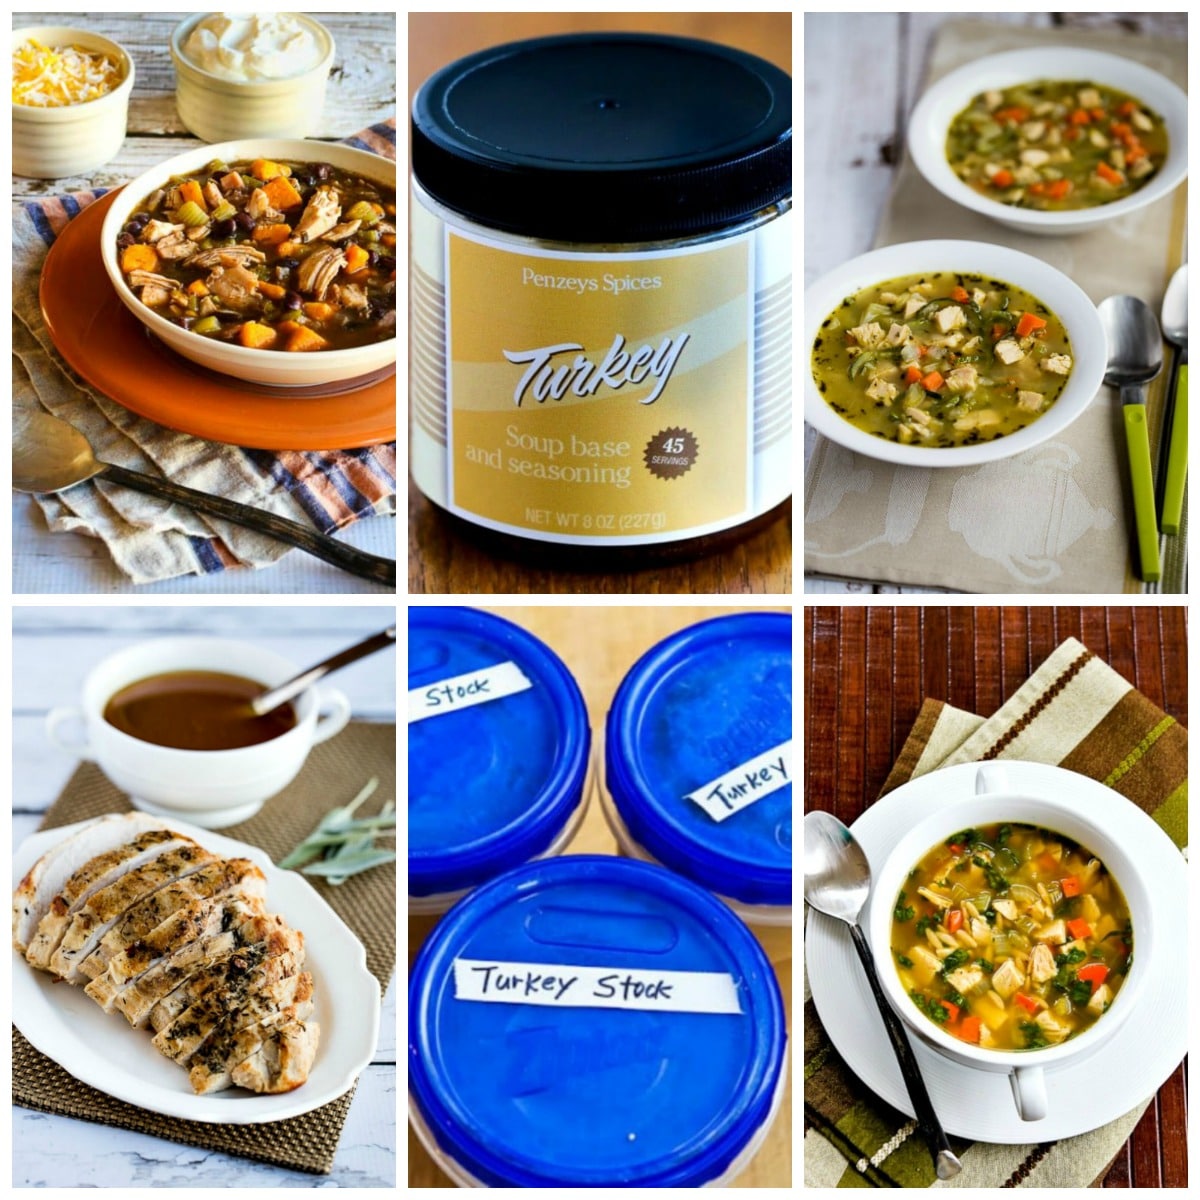 DO Picks: Penzey's Turkey Soup Base collagefoto 